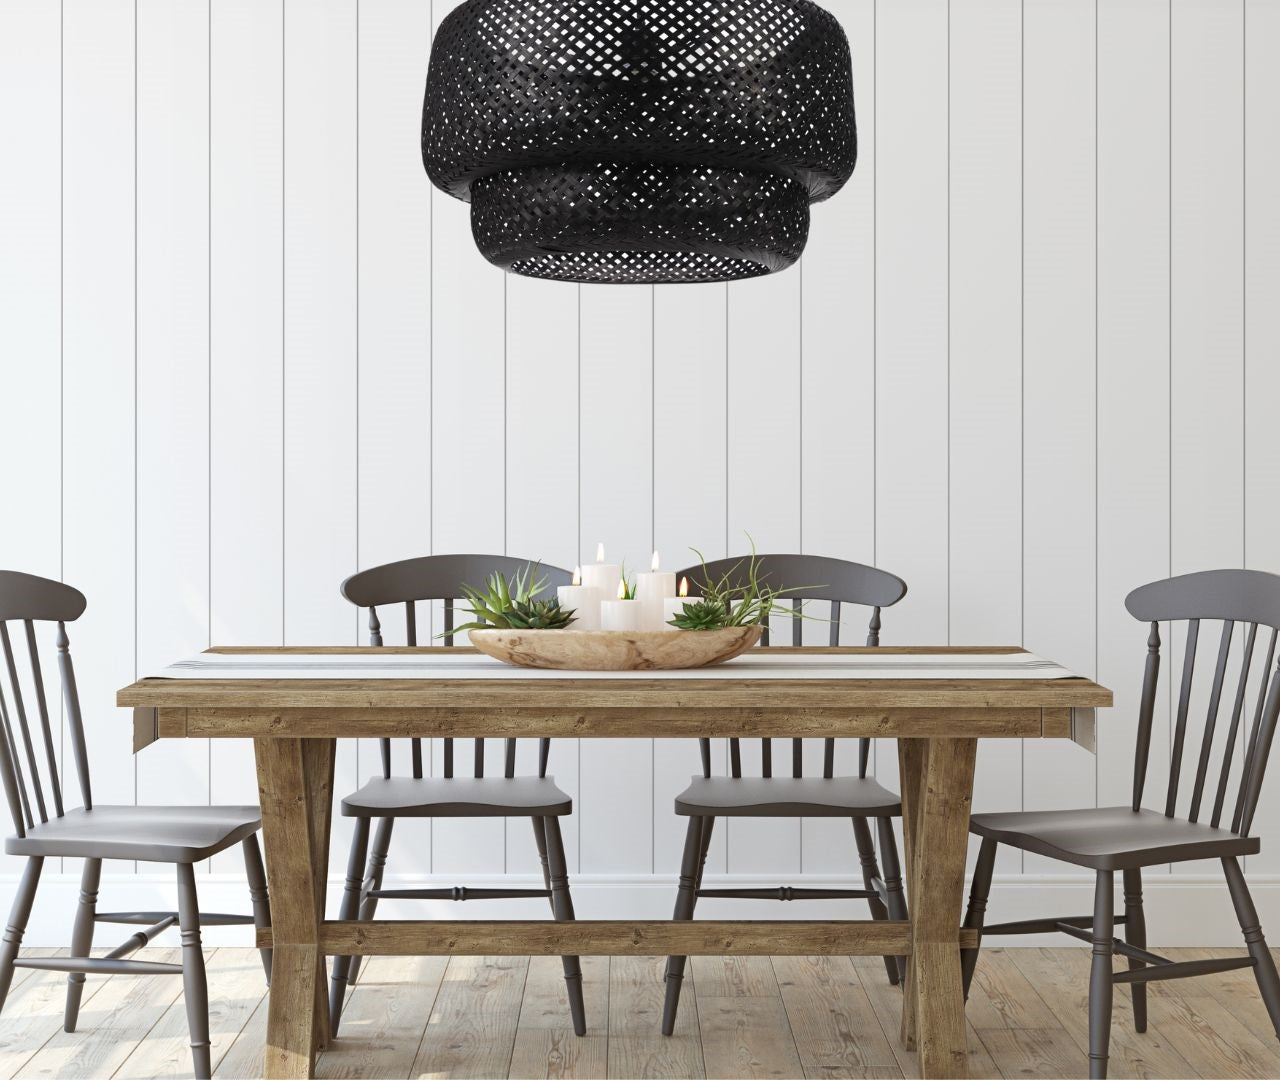 black rattan pendant light in dining room, black rattan light